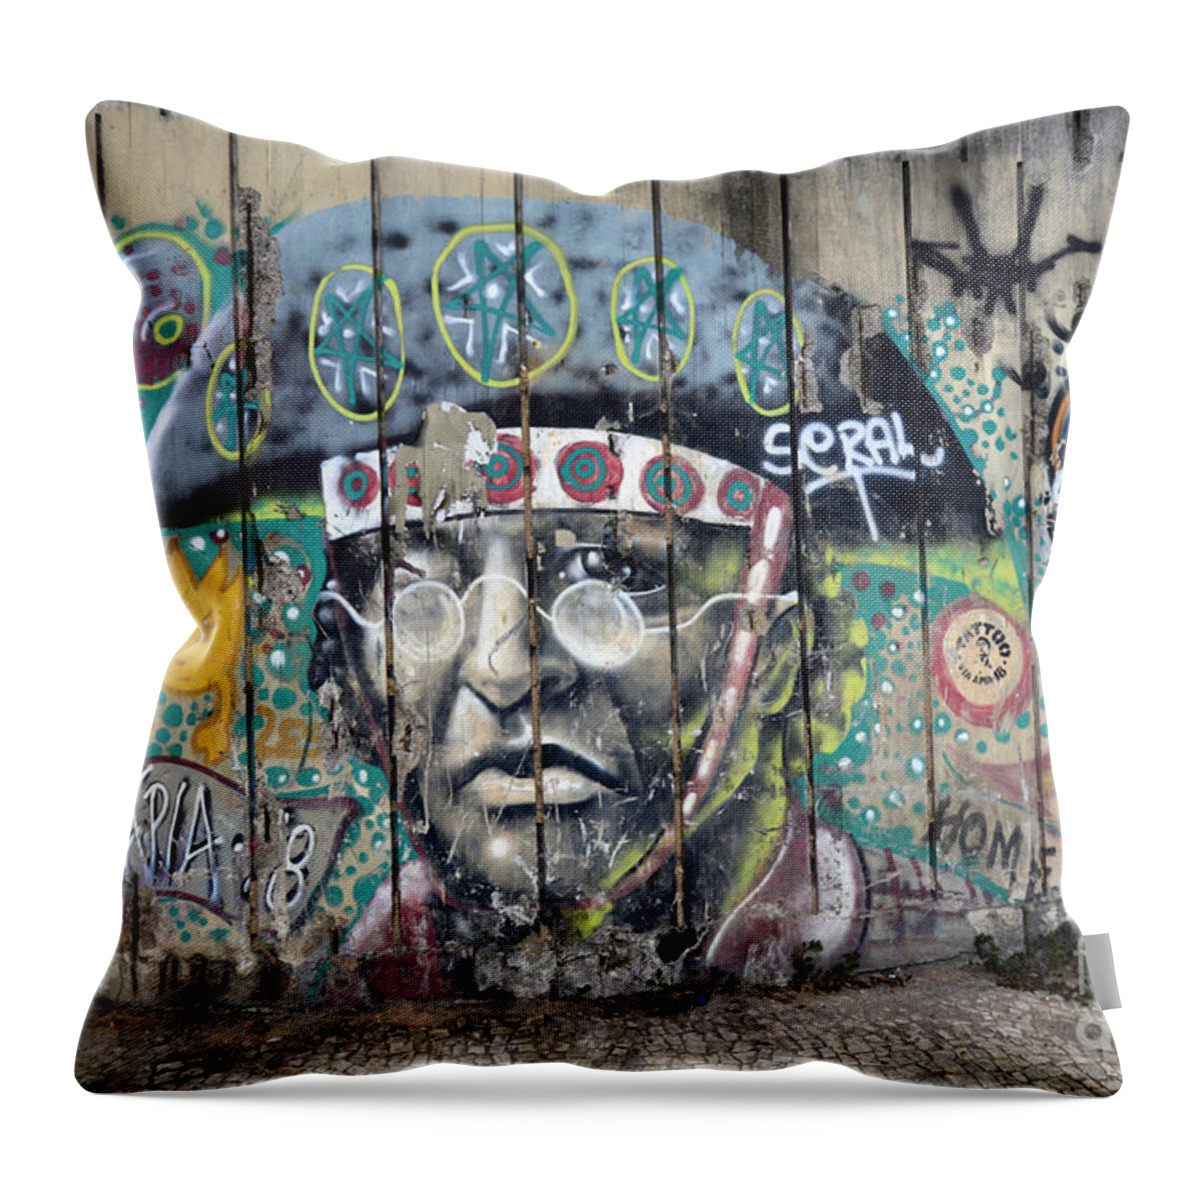 Graffiti Throw Pillow featuring the photograph Graffiti Art Rio De Janeiro 1 by Bob Christopher